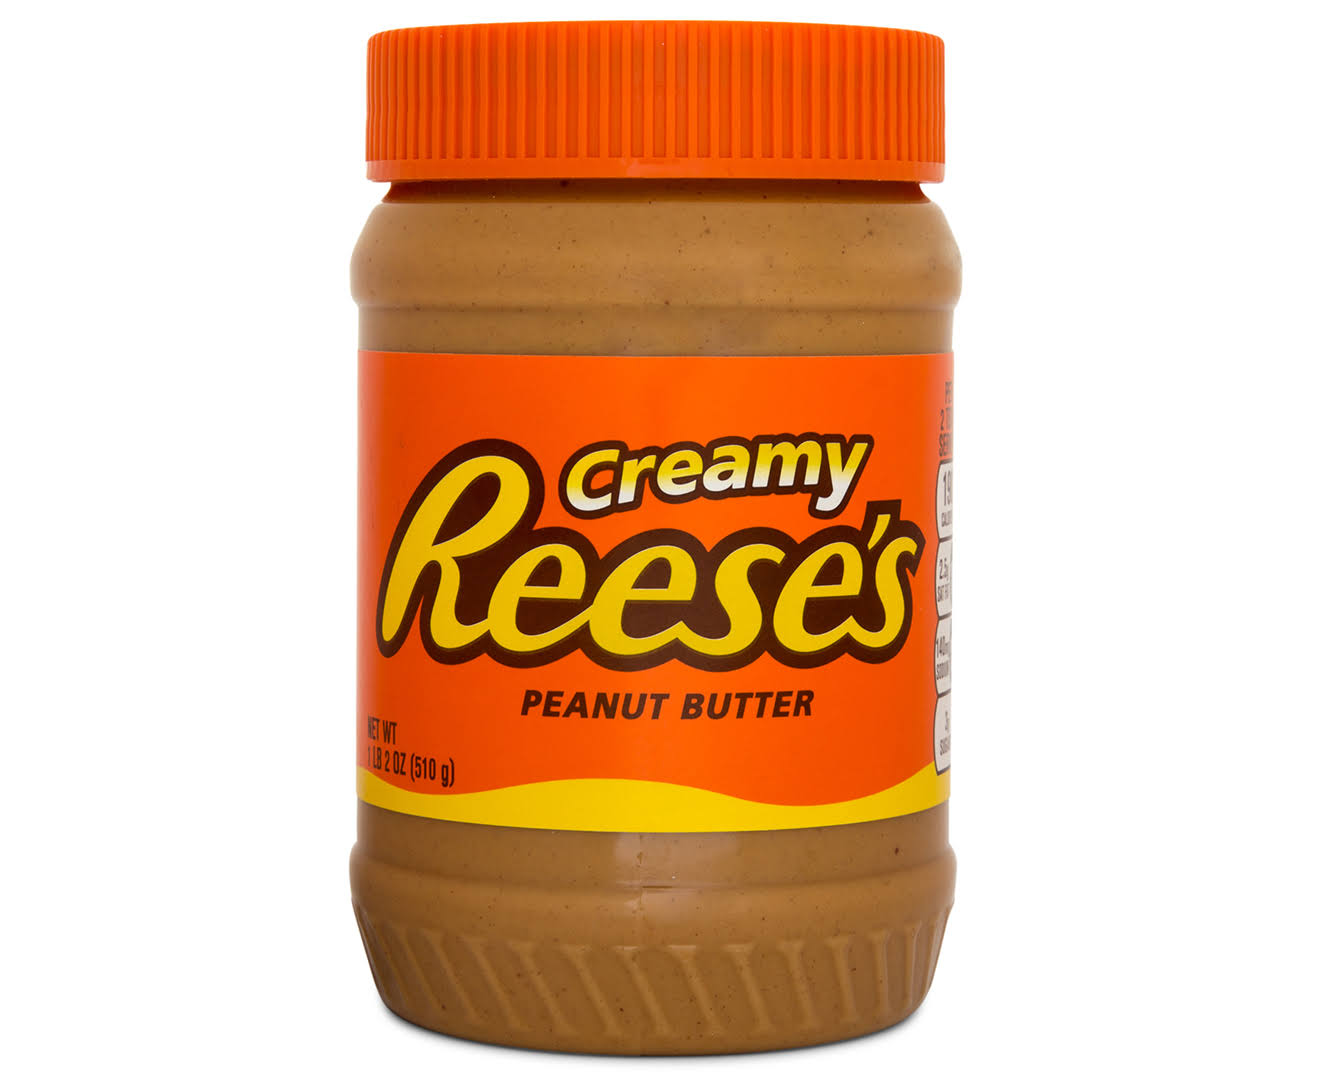 Reese's Peanut Butter, Creamy - 18 oz jar